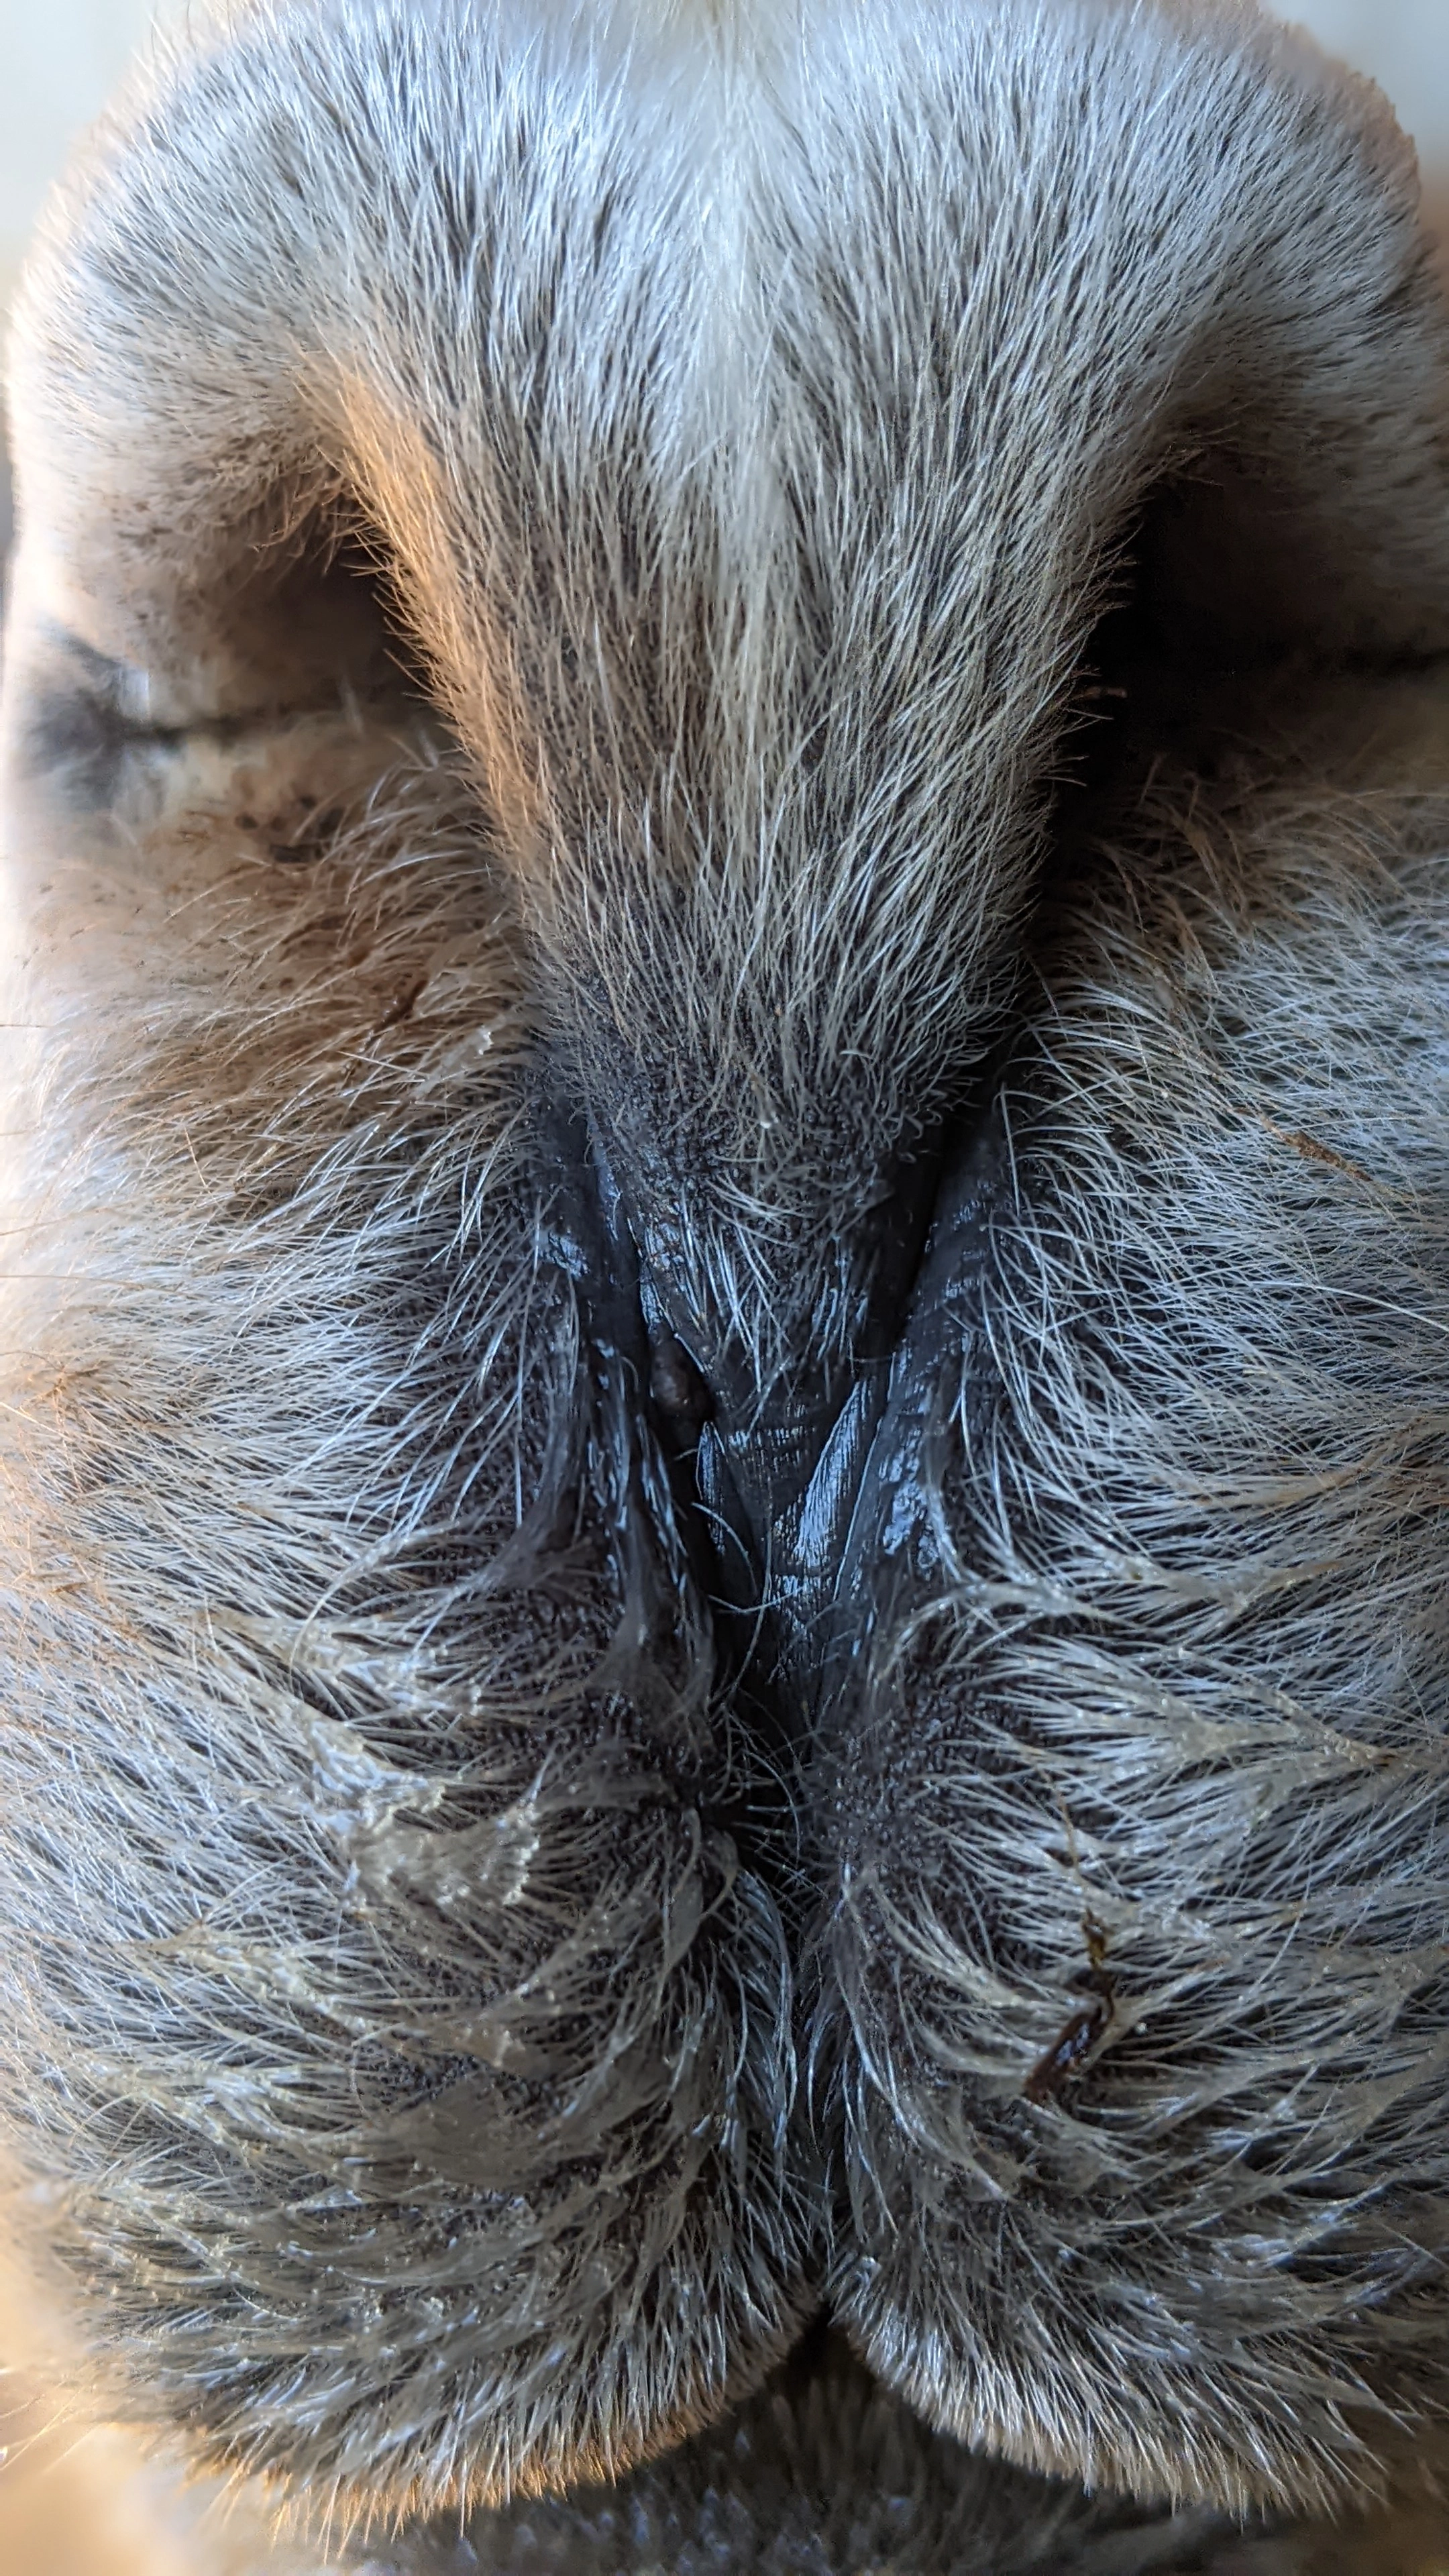 A close-up photo of Pellegrino's nose.